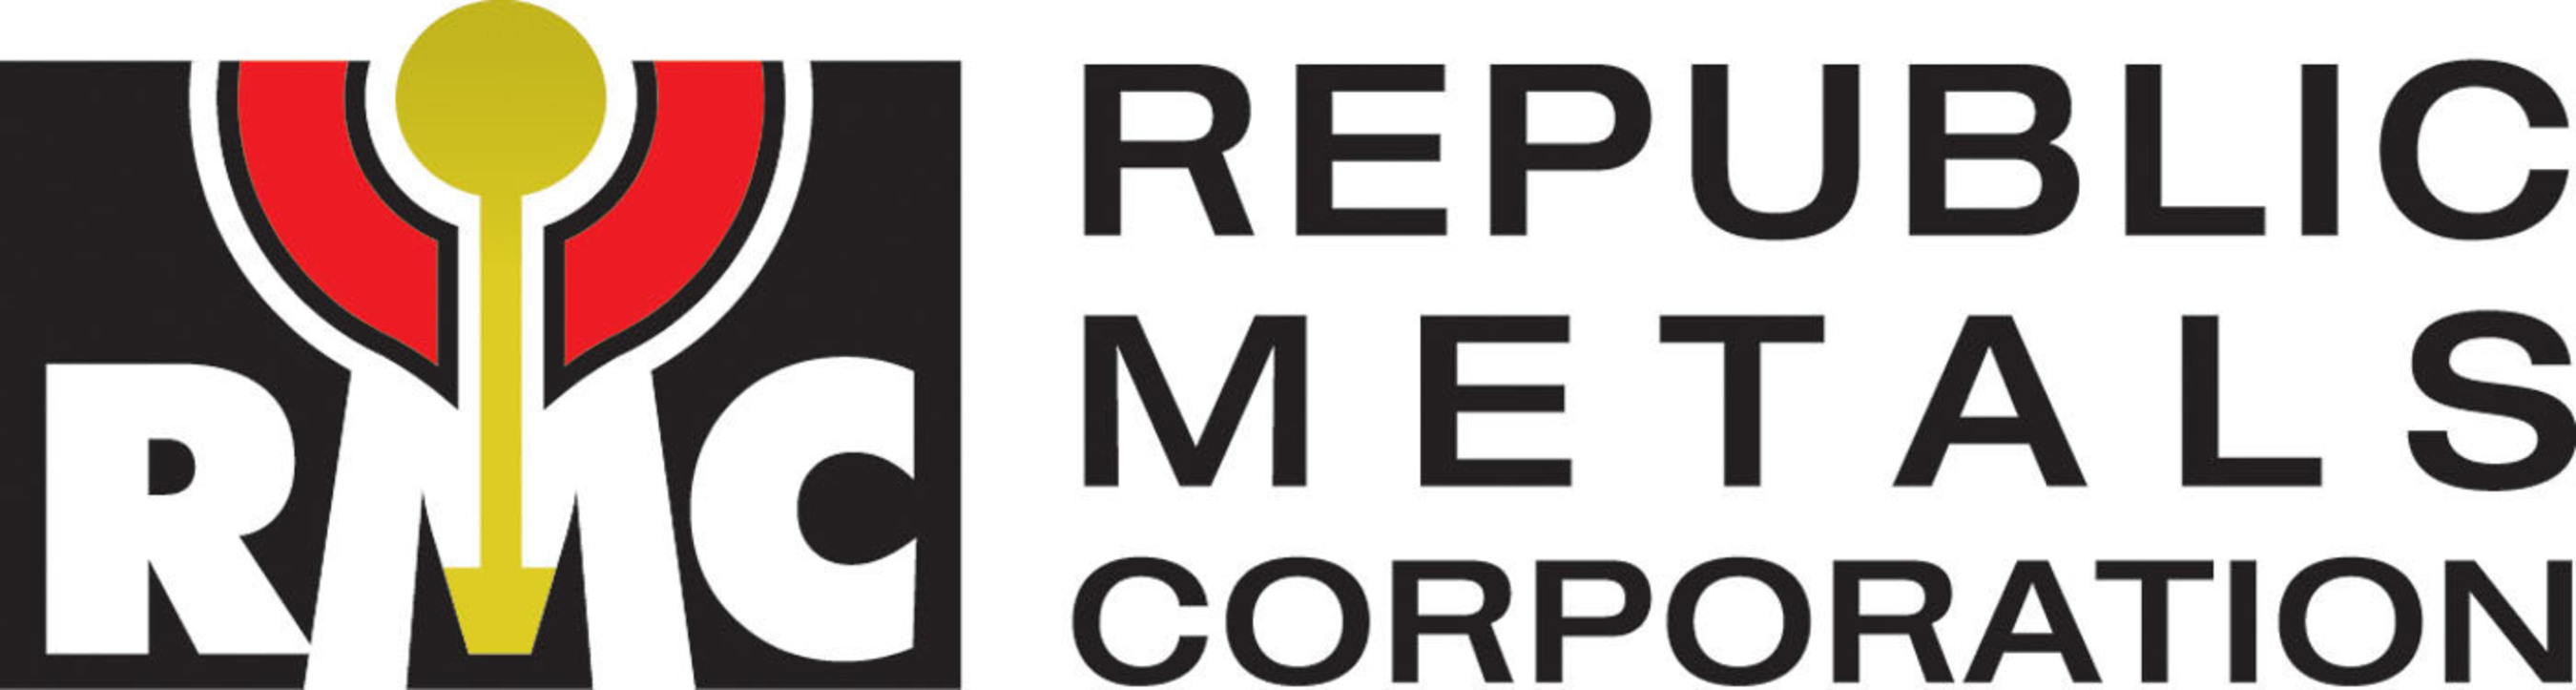 Republic Metals Corporation Logo. (PRNewsFoto/Republic Metals Corporation)